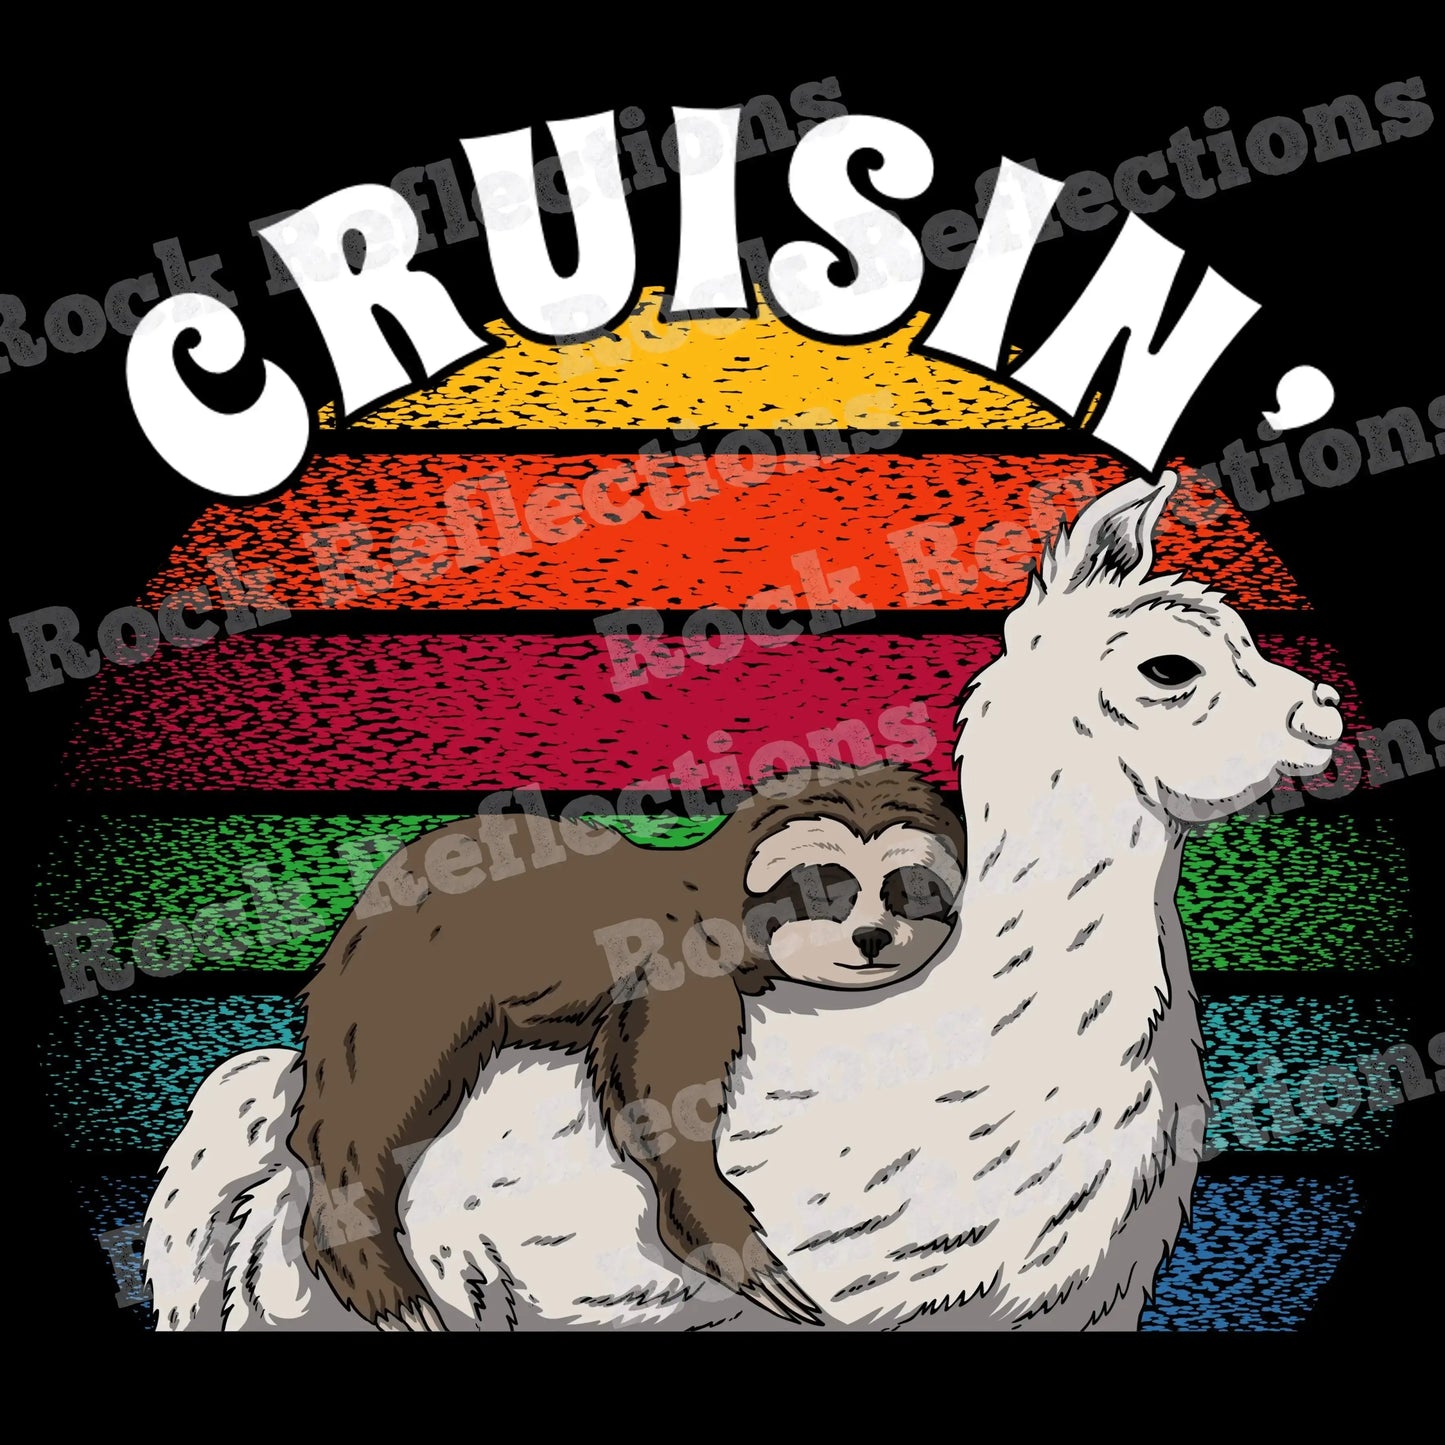 Sloth & Llama Cruisin' SPOD